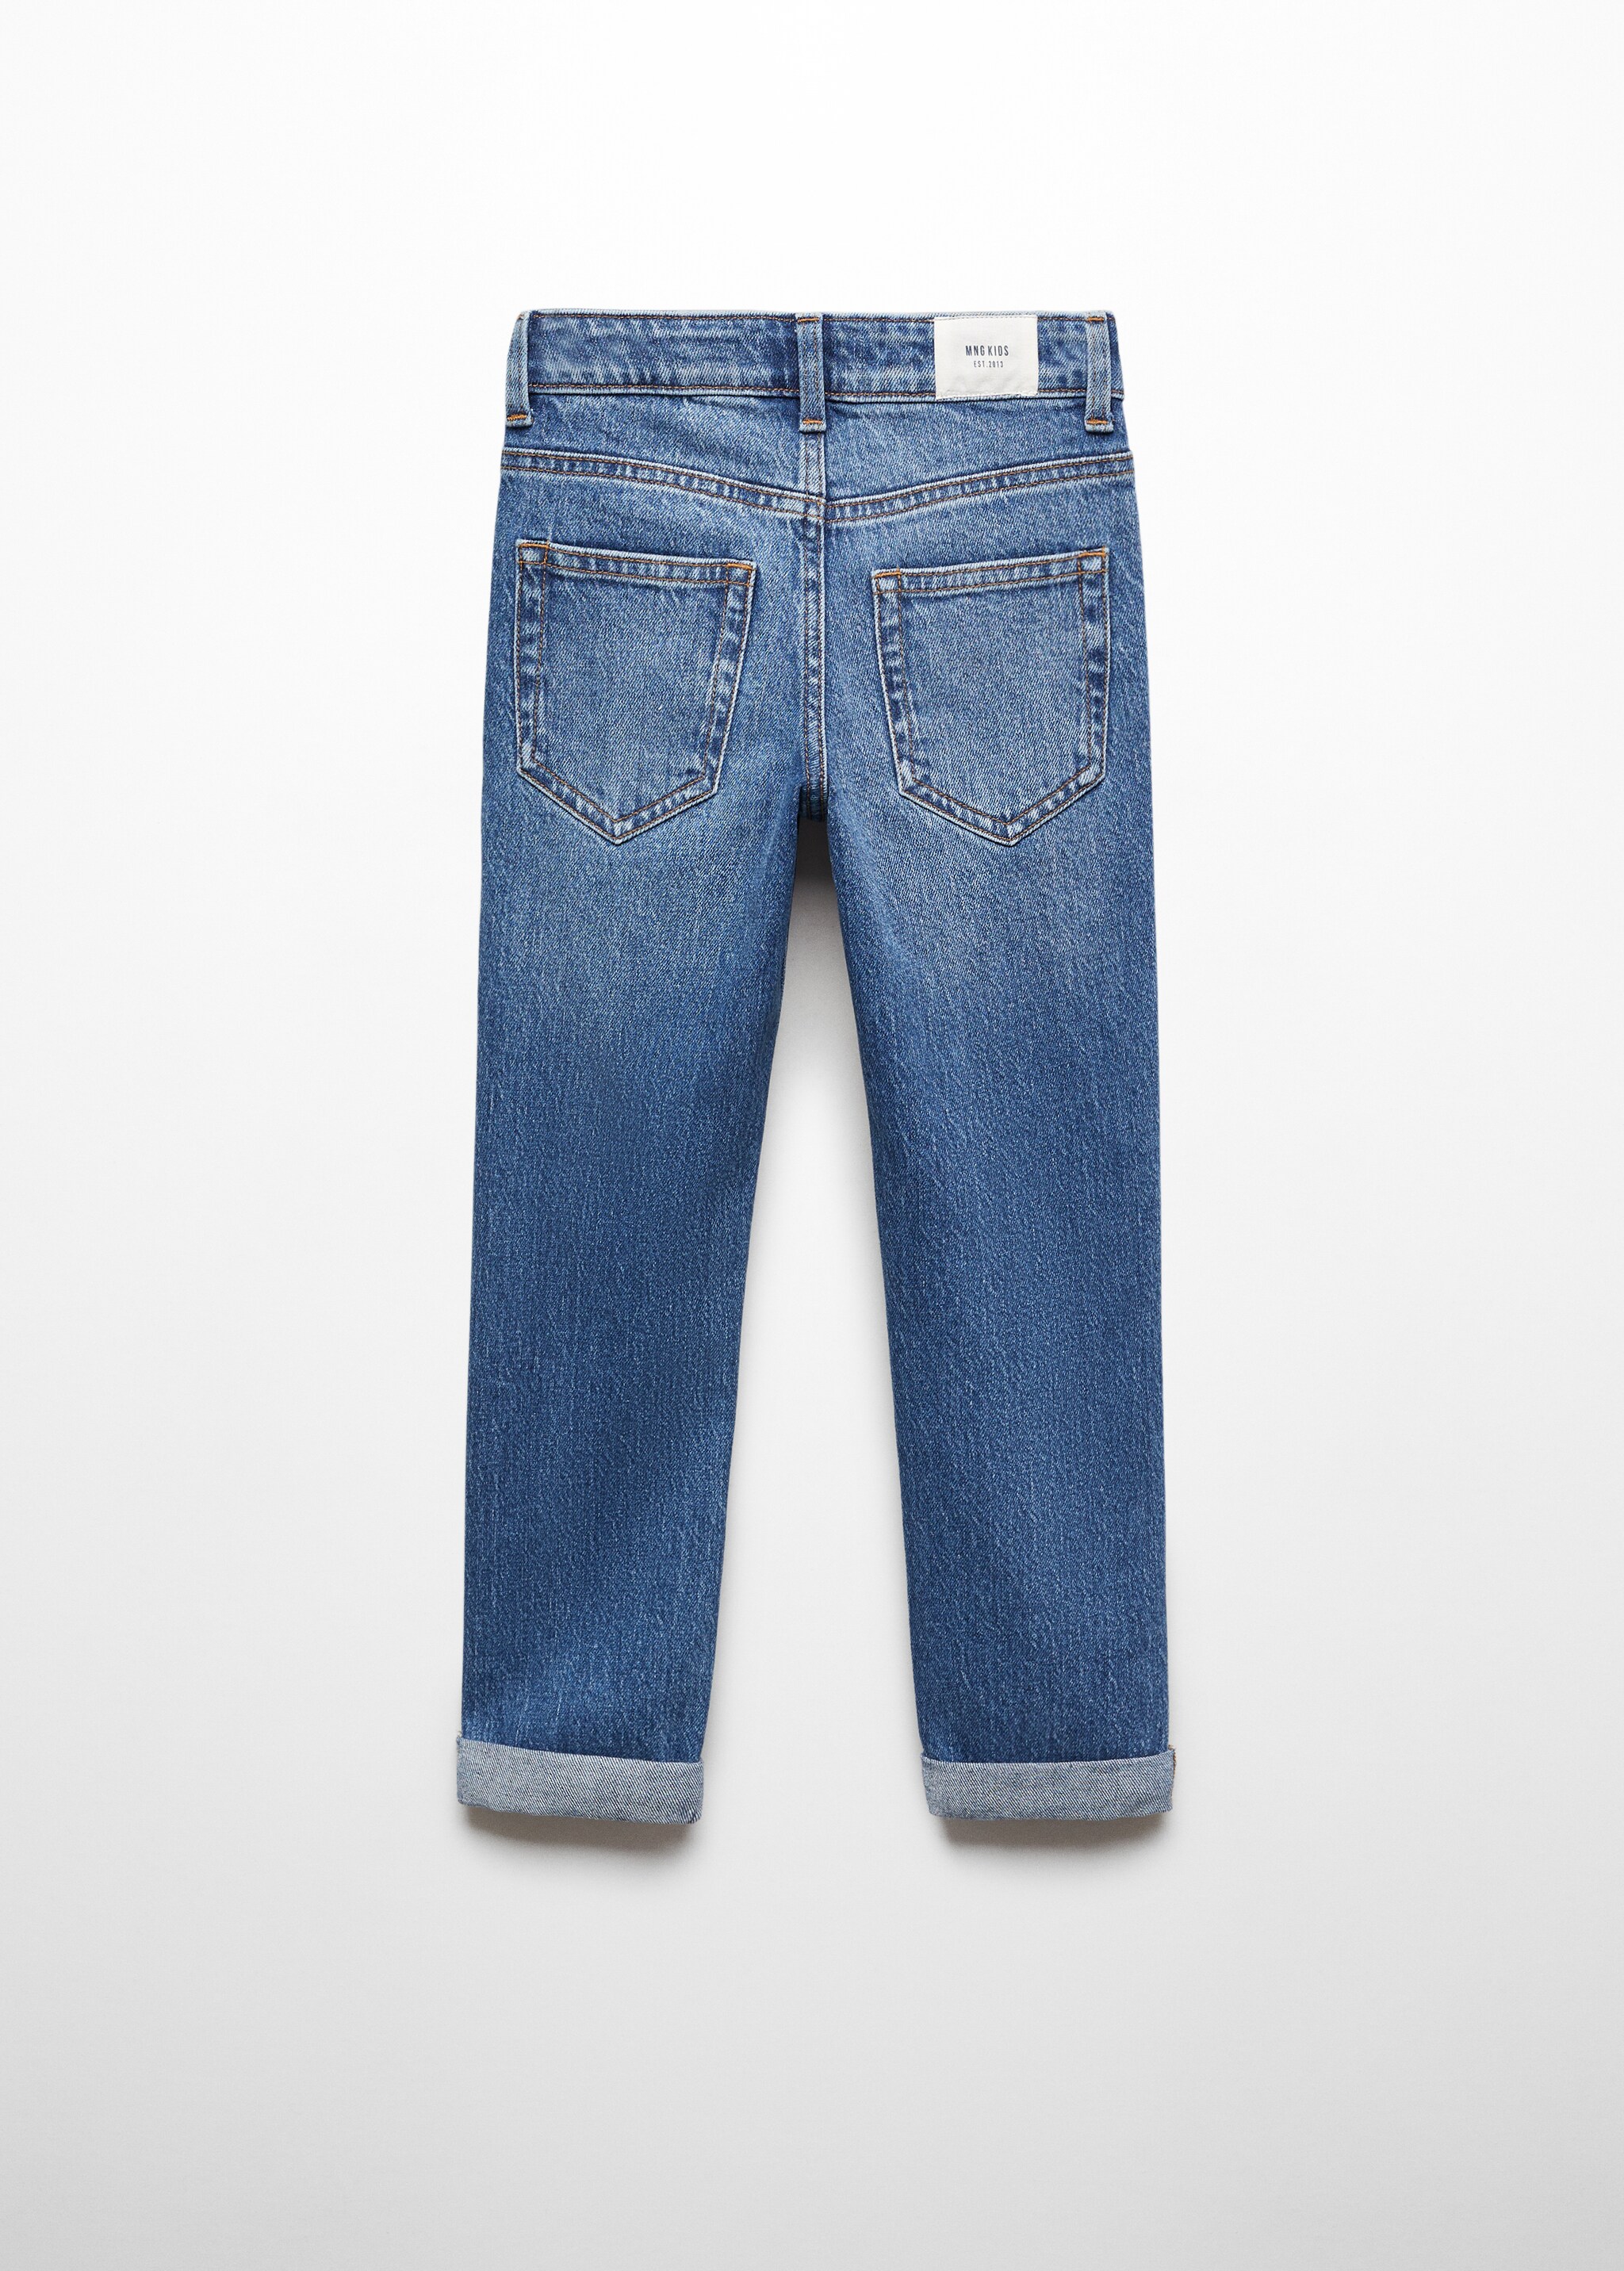 Jeans regular fit - Reverso del artículo